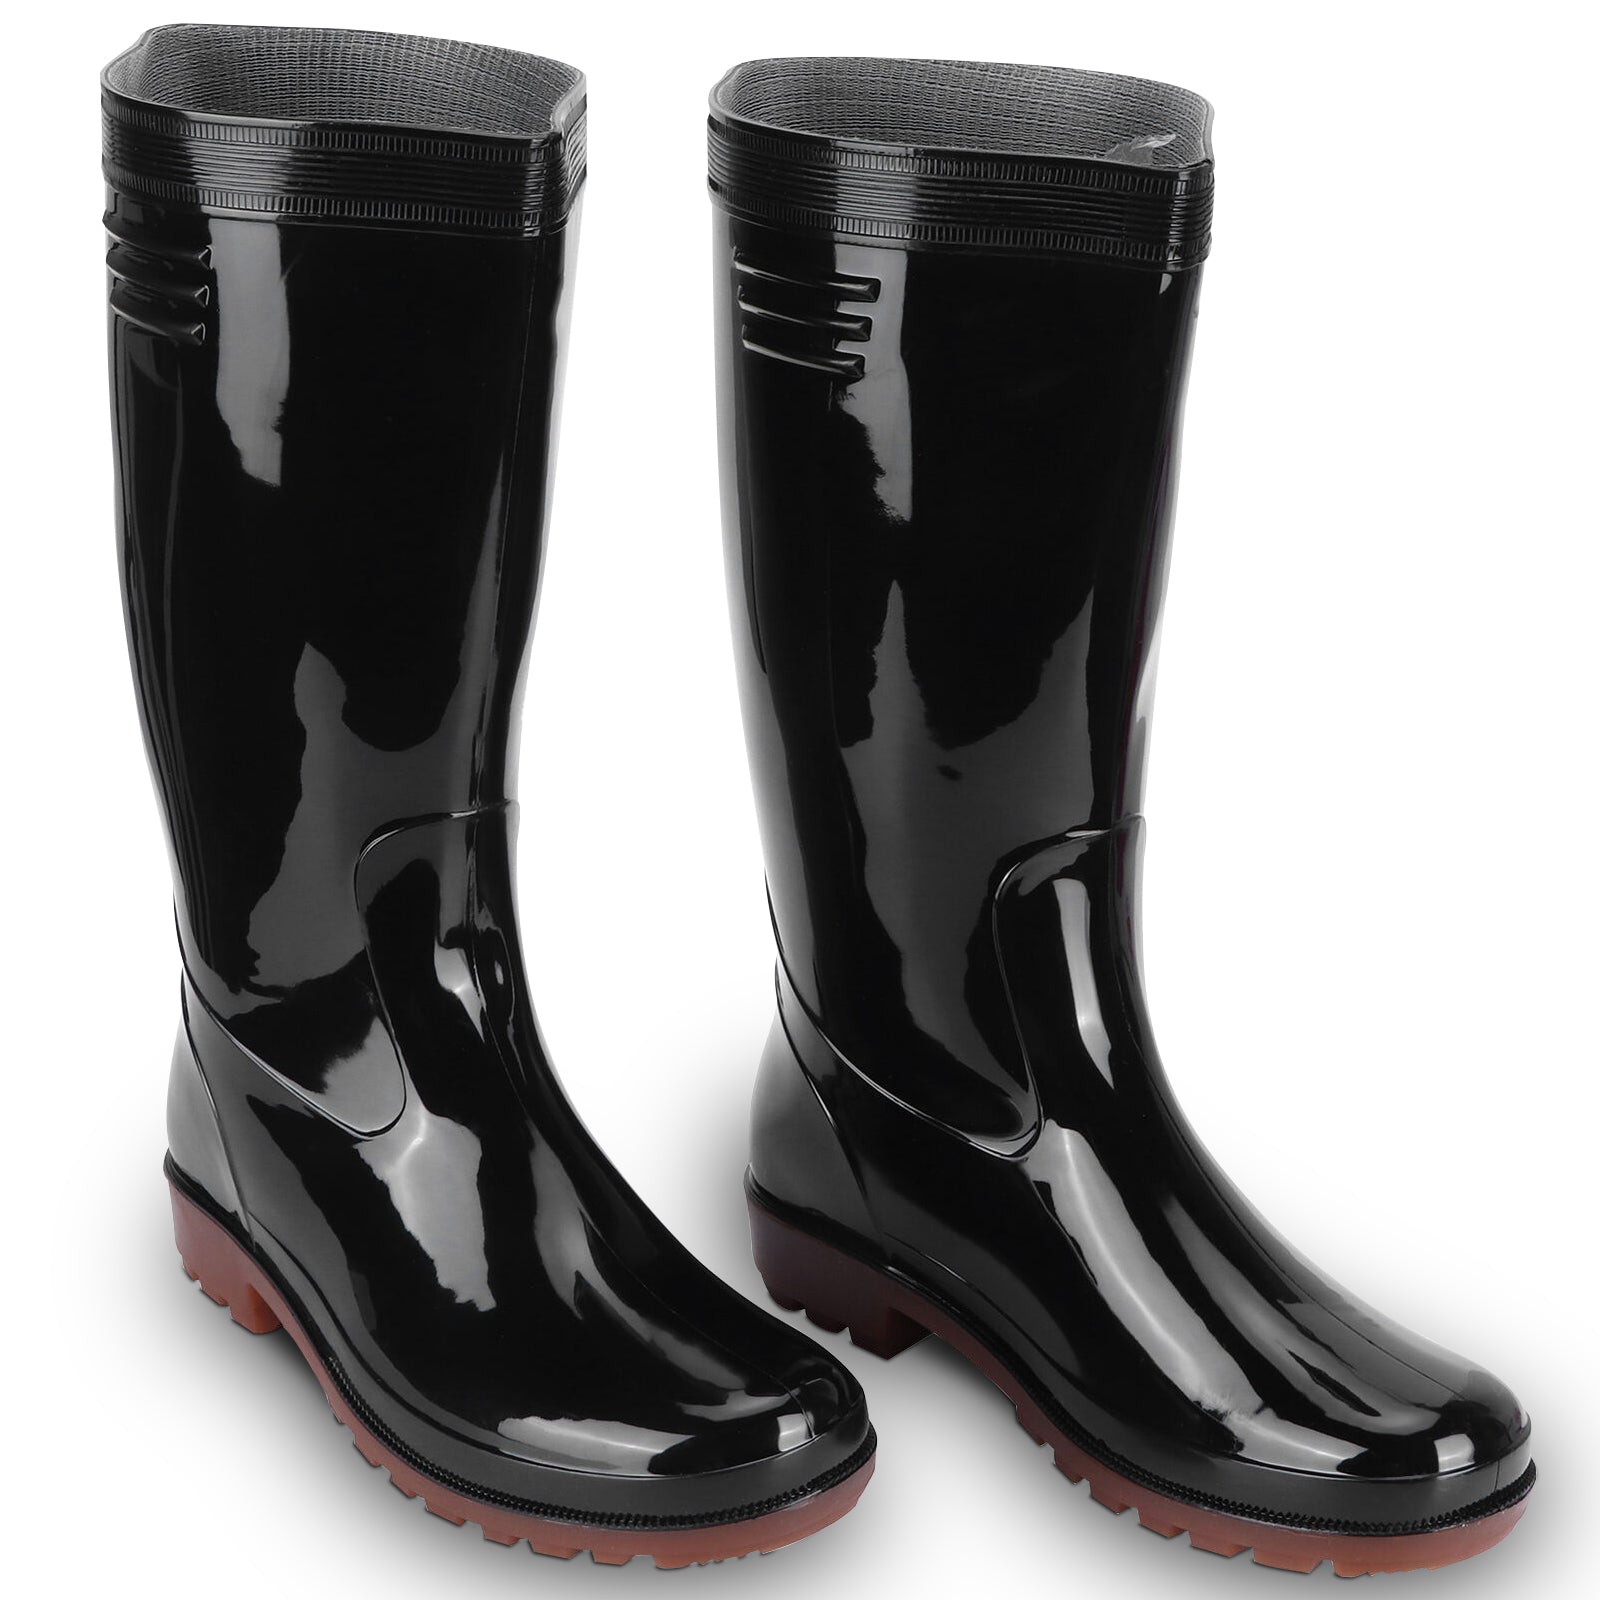 Worker Wellies Rain Waterproof Lightweight Boots Garden Work Shoes - Detail Image 3